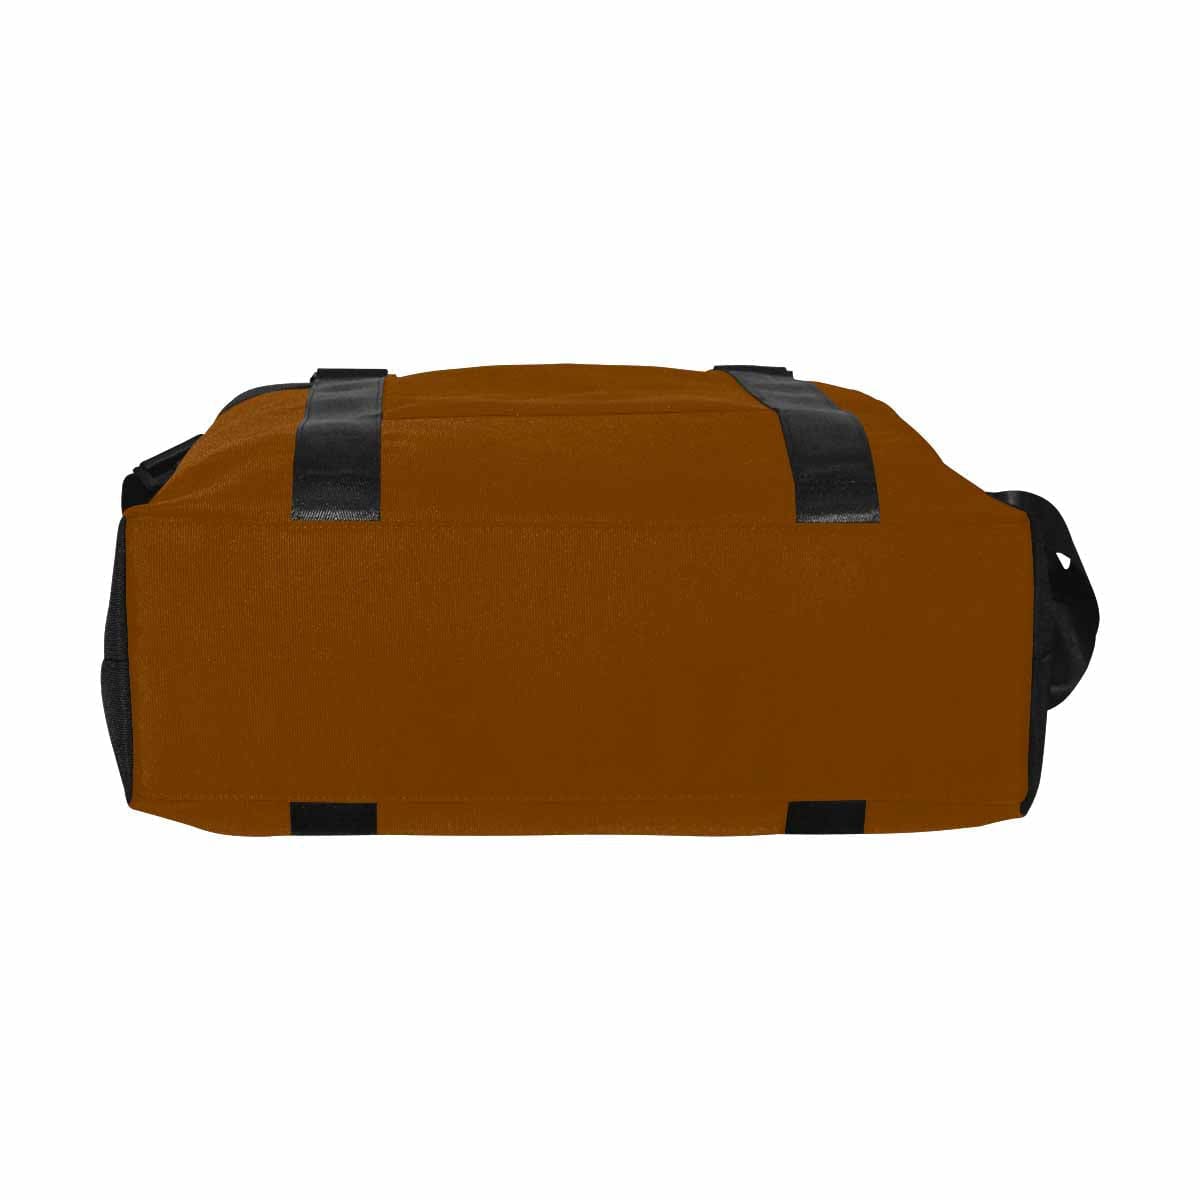 Chocolate Brown Duffel Bag Large Travel Carry On - Bags | Duffel Bags